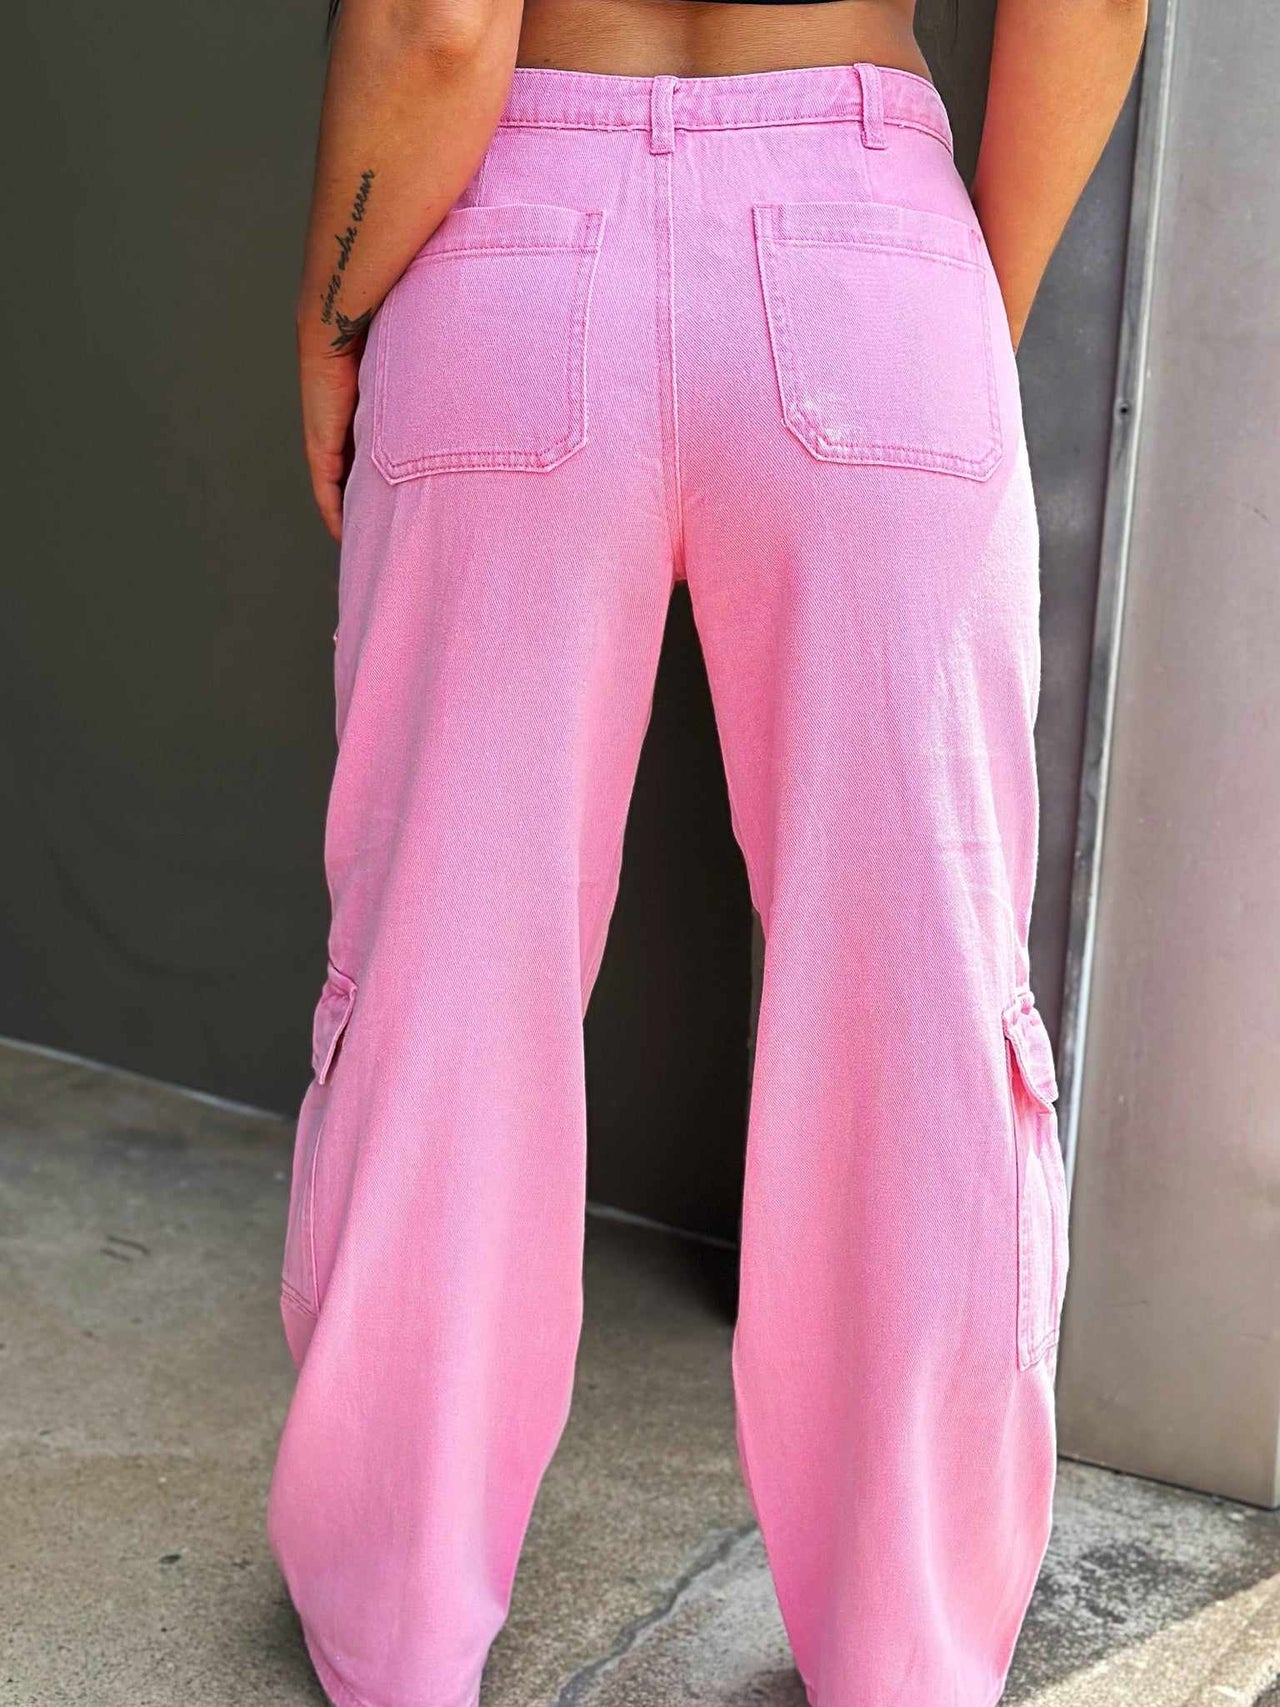 Pink denim cargo pants